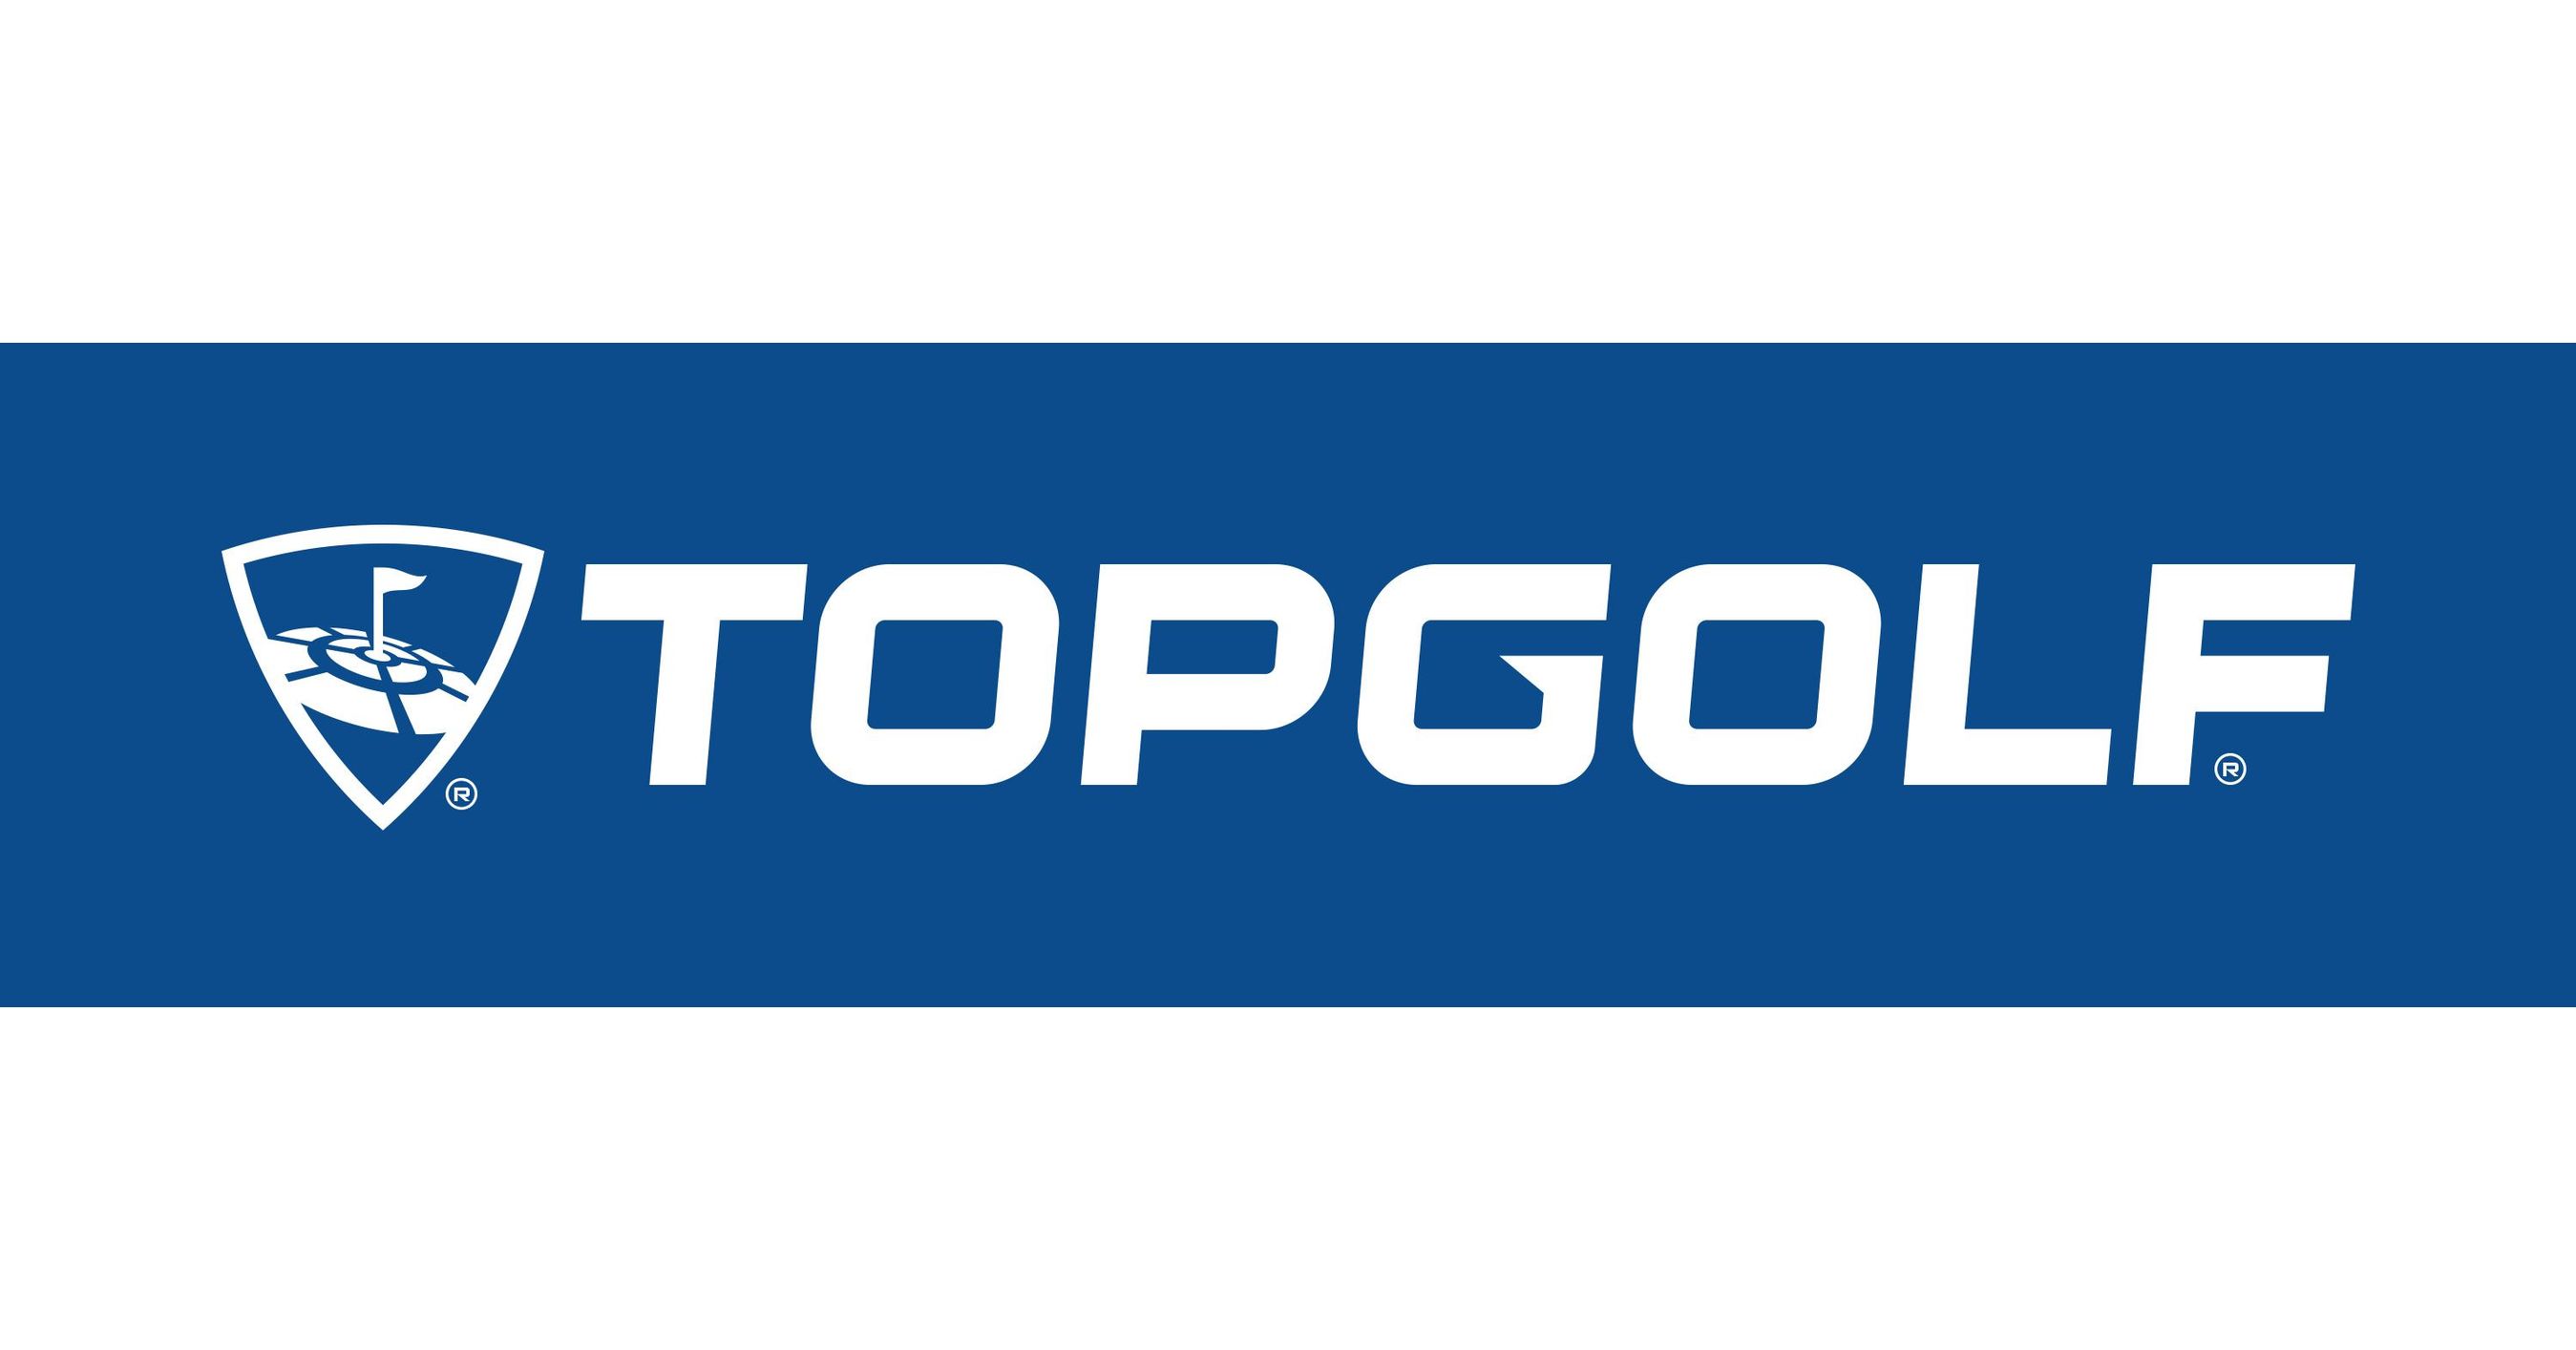 St. Petersburg Topgolf location opens this week